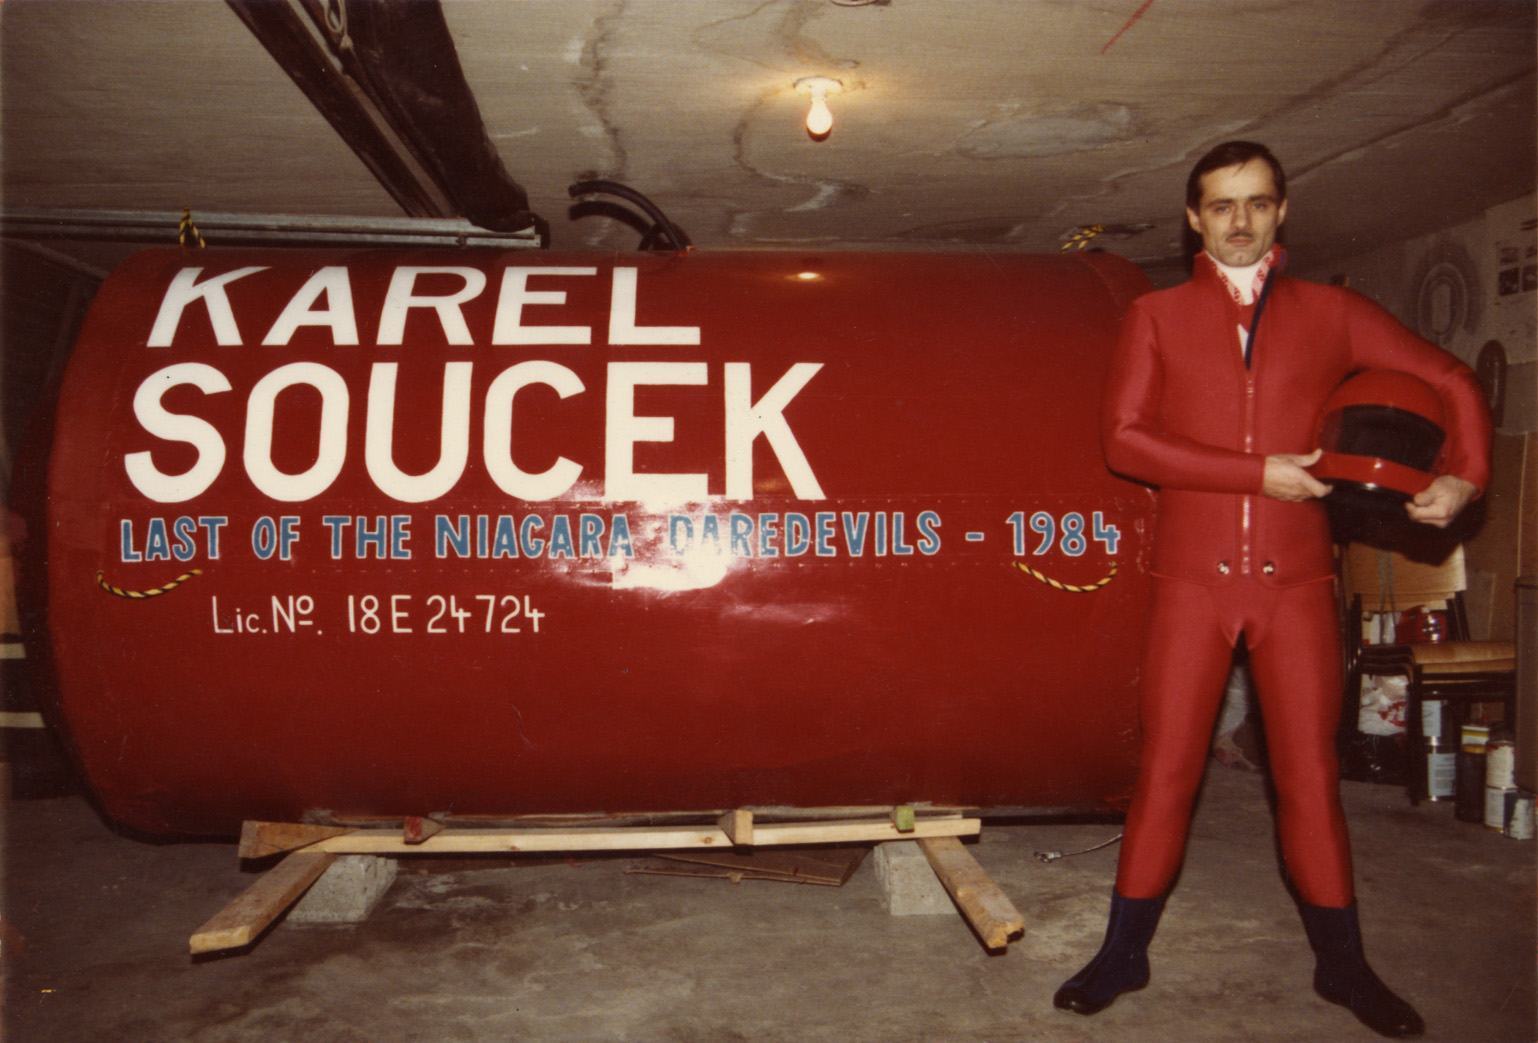 Karel Soucek stuntman barrel Niagara falls